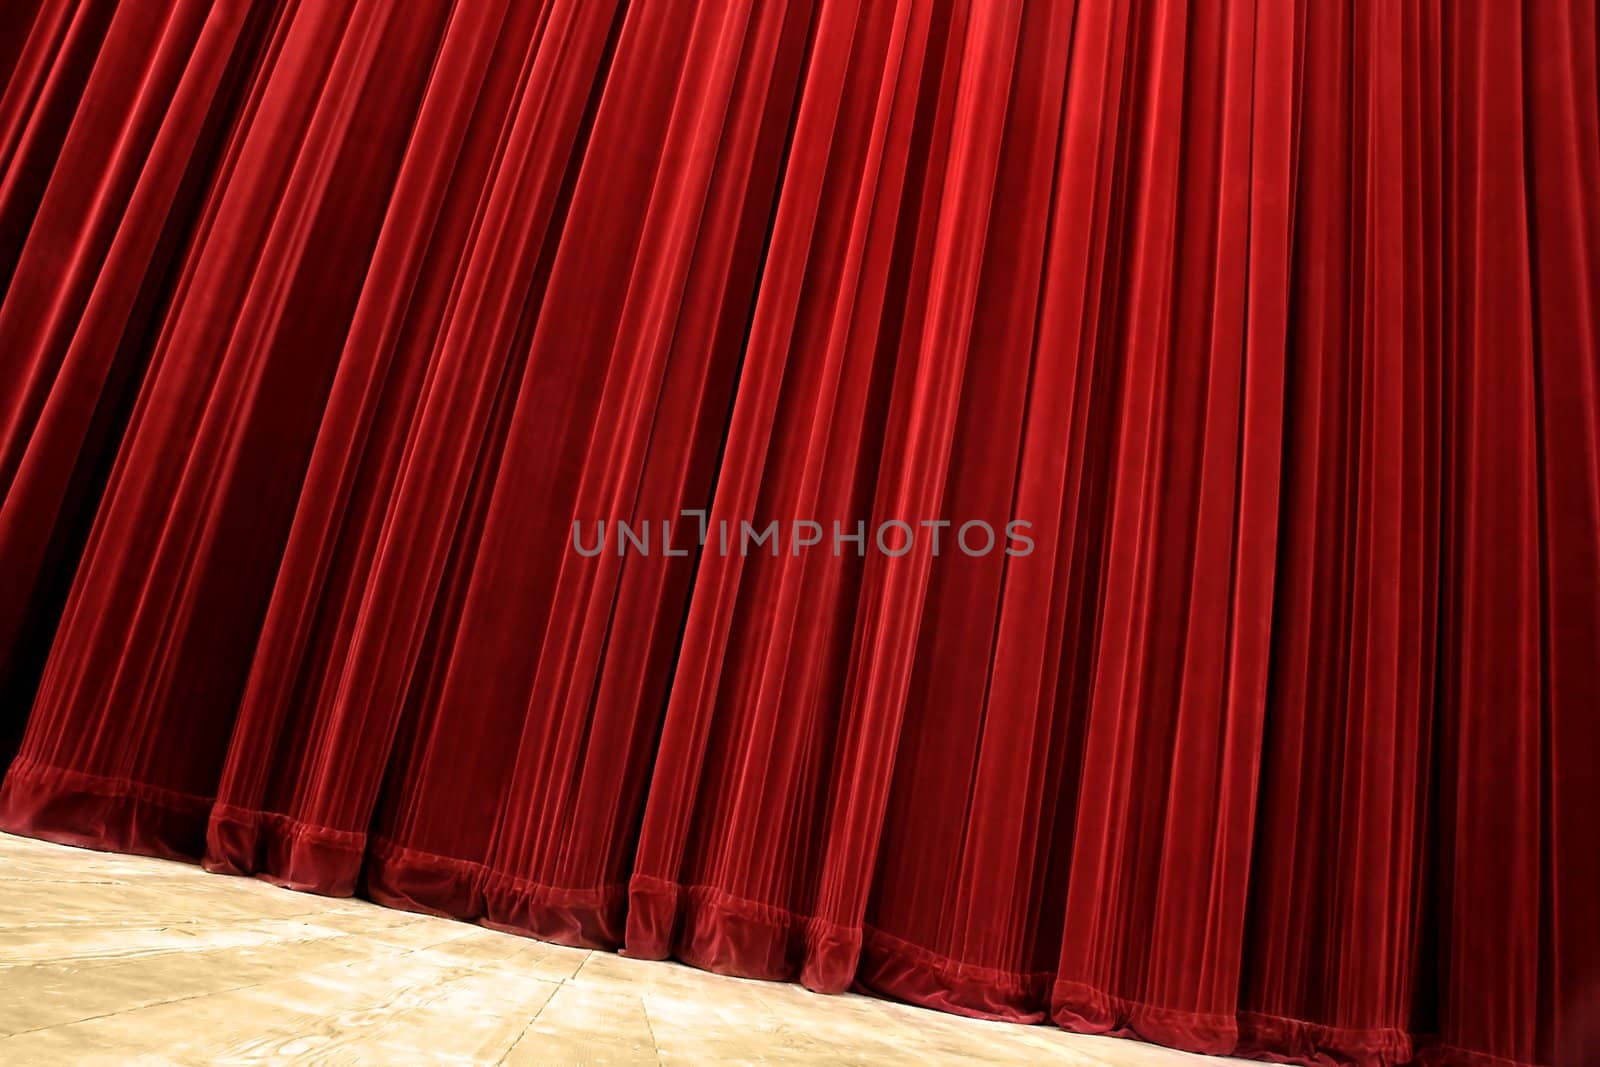 red velvet closed curtain, tilted photo, wooden floor